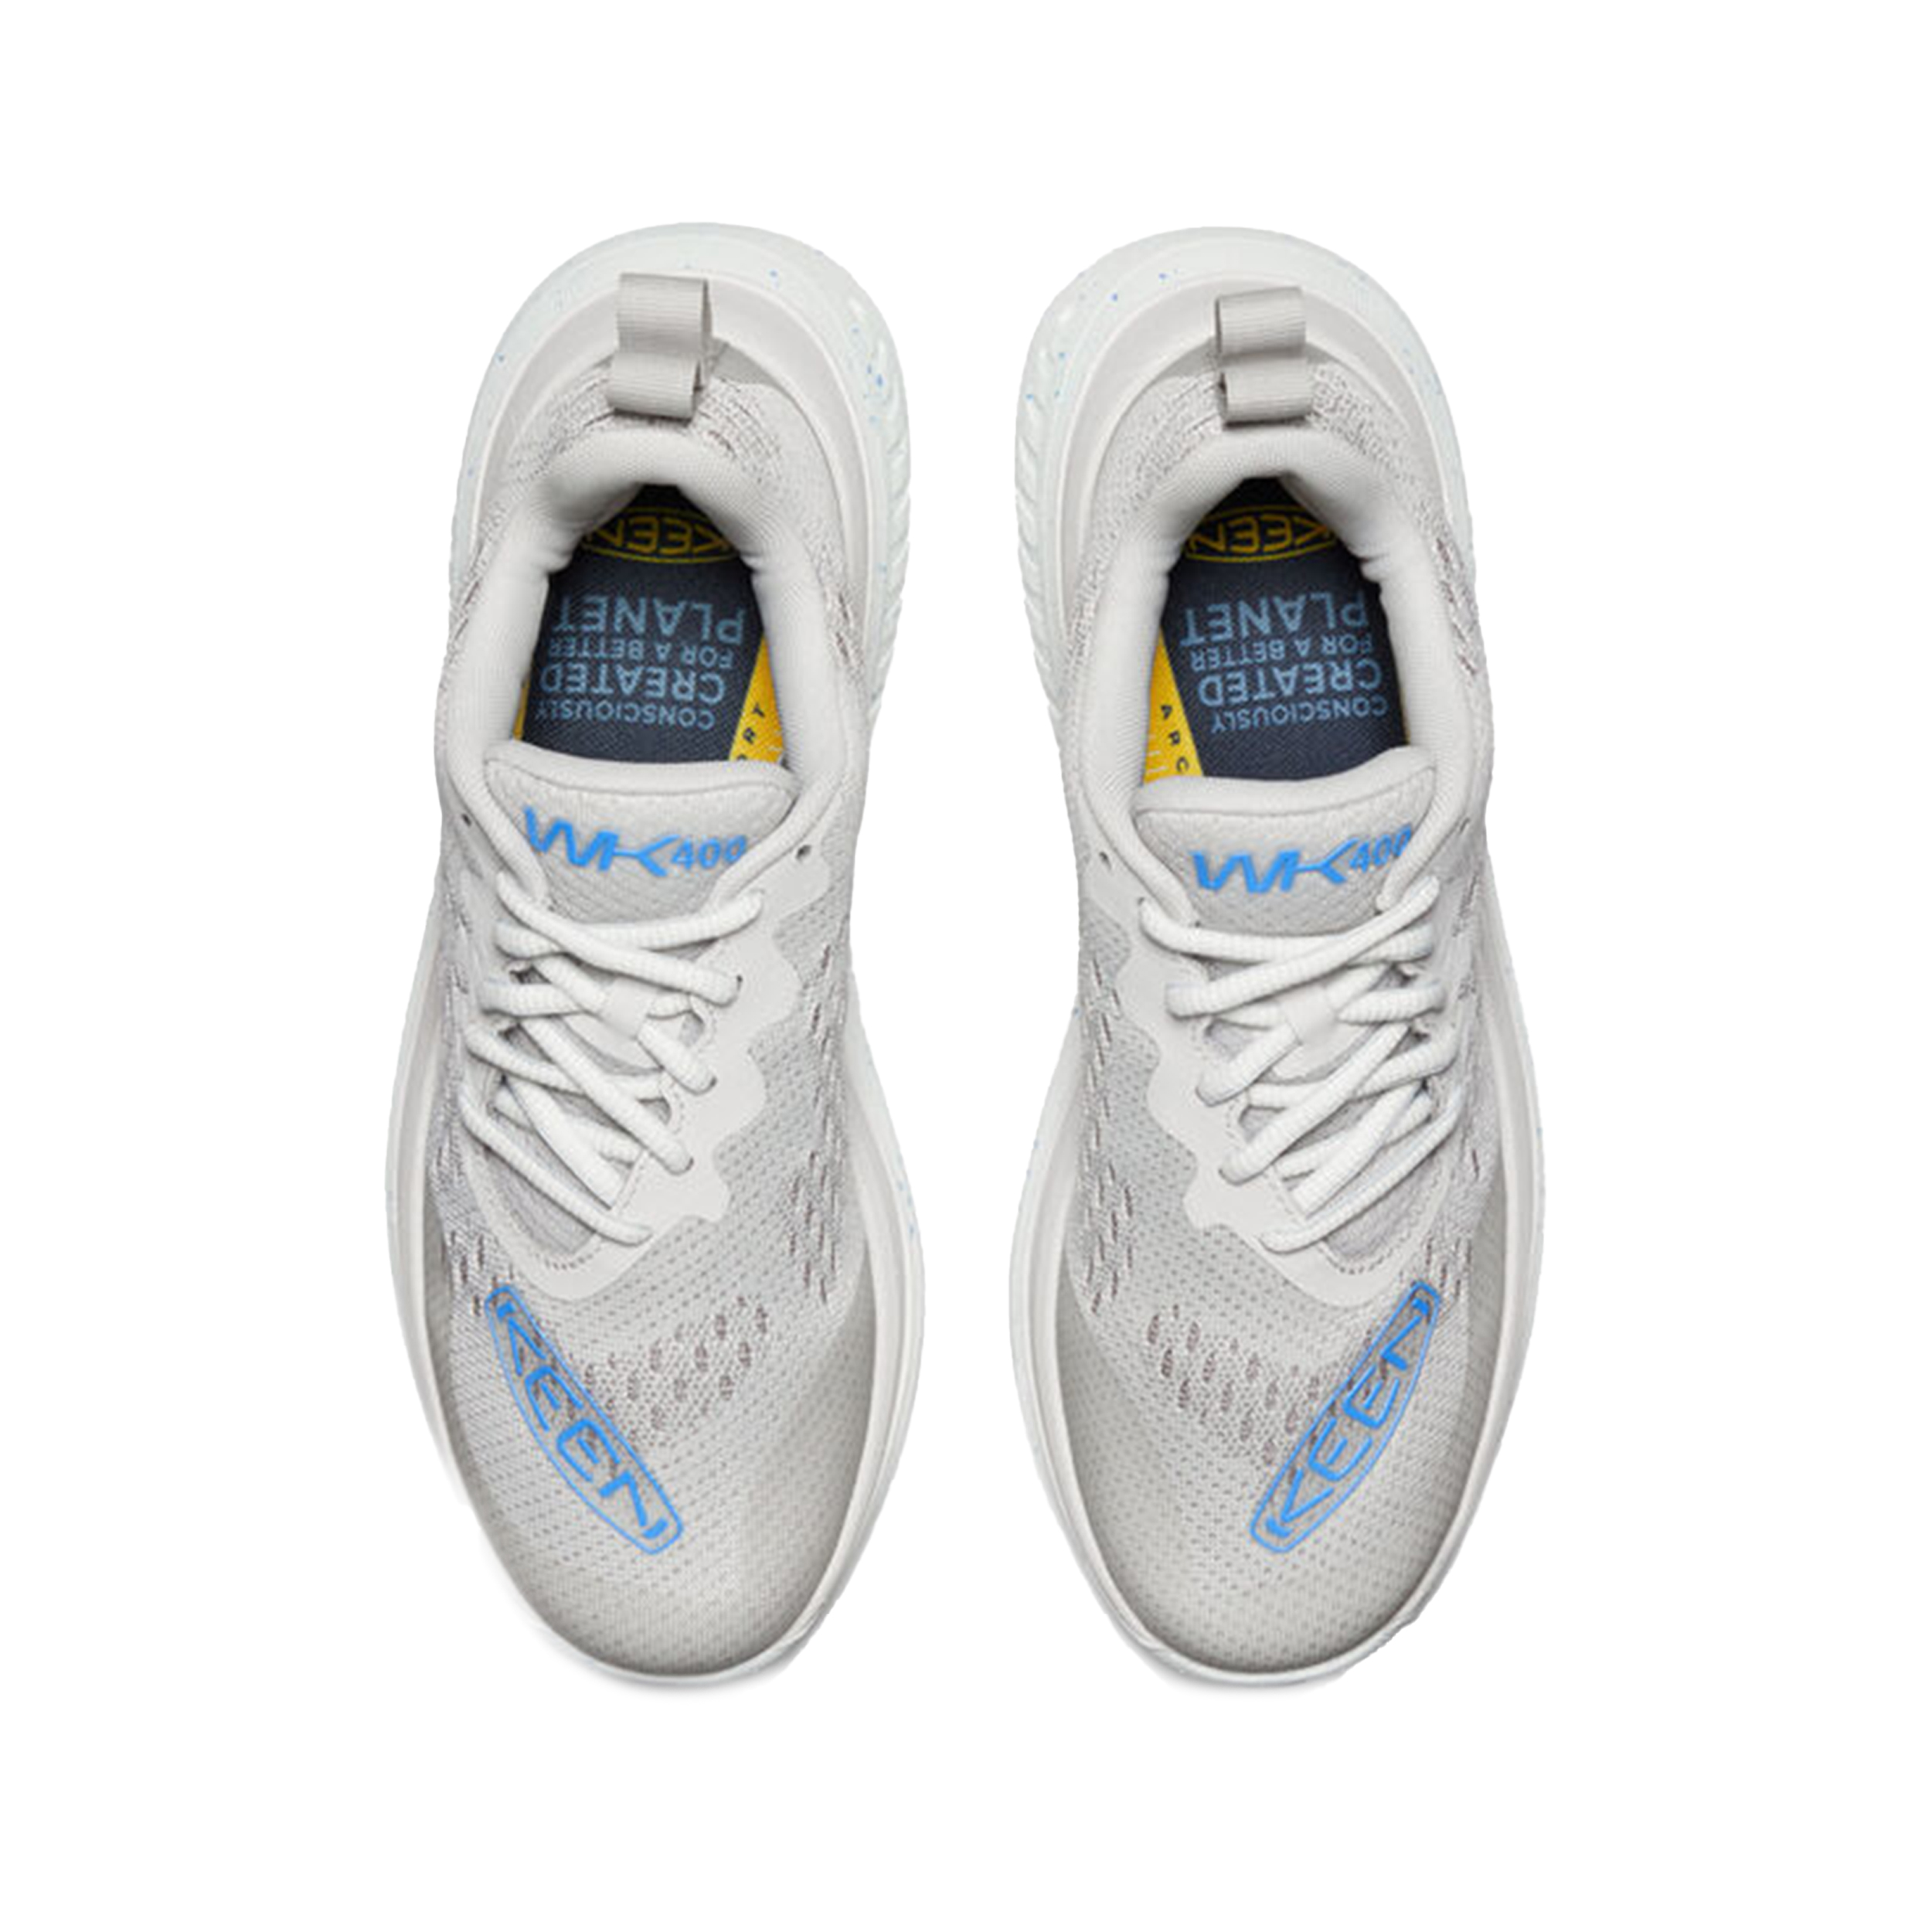 Keen K1027474 Sneaker WK400 Women Vapor/Azure Blue